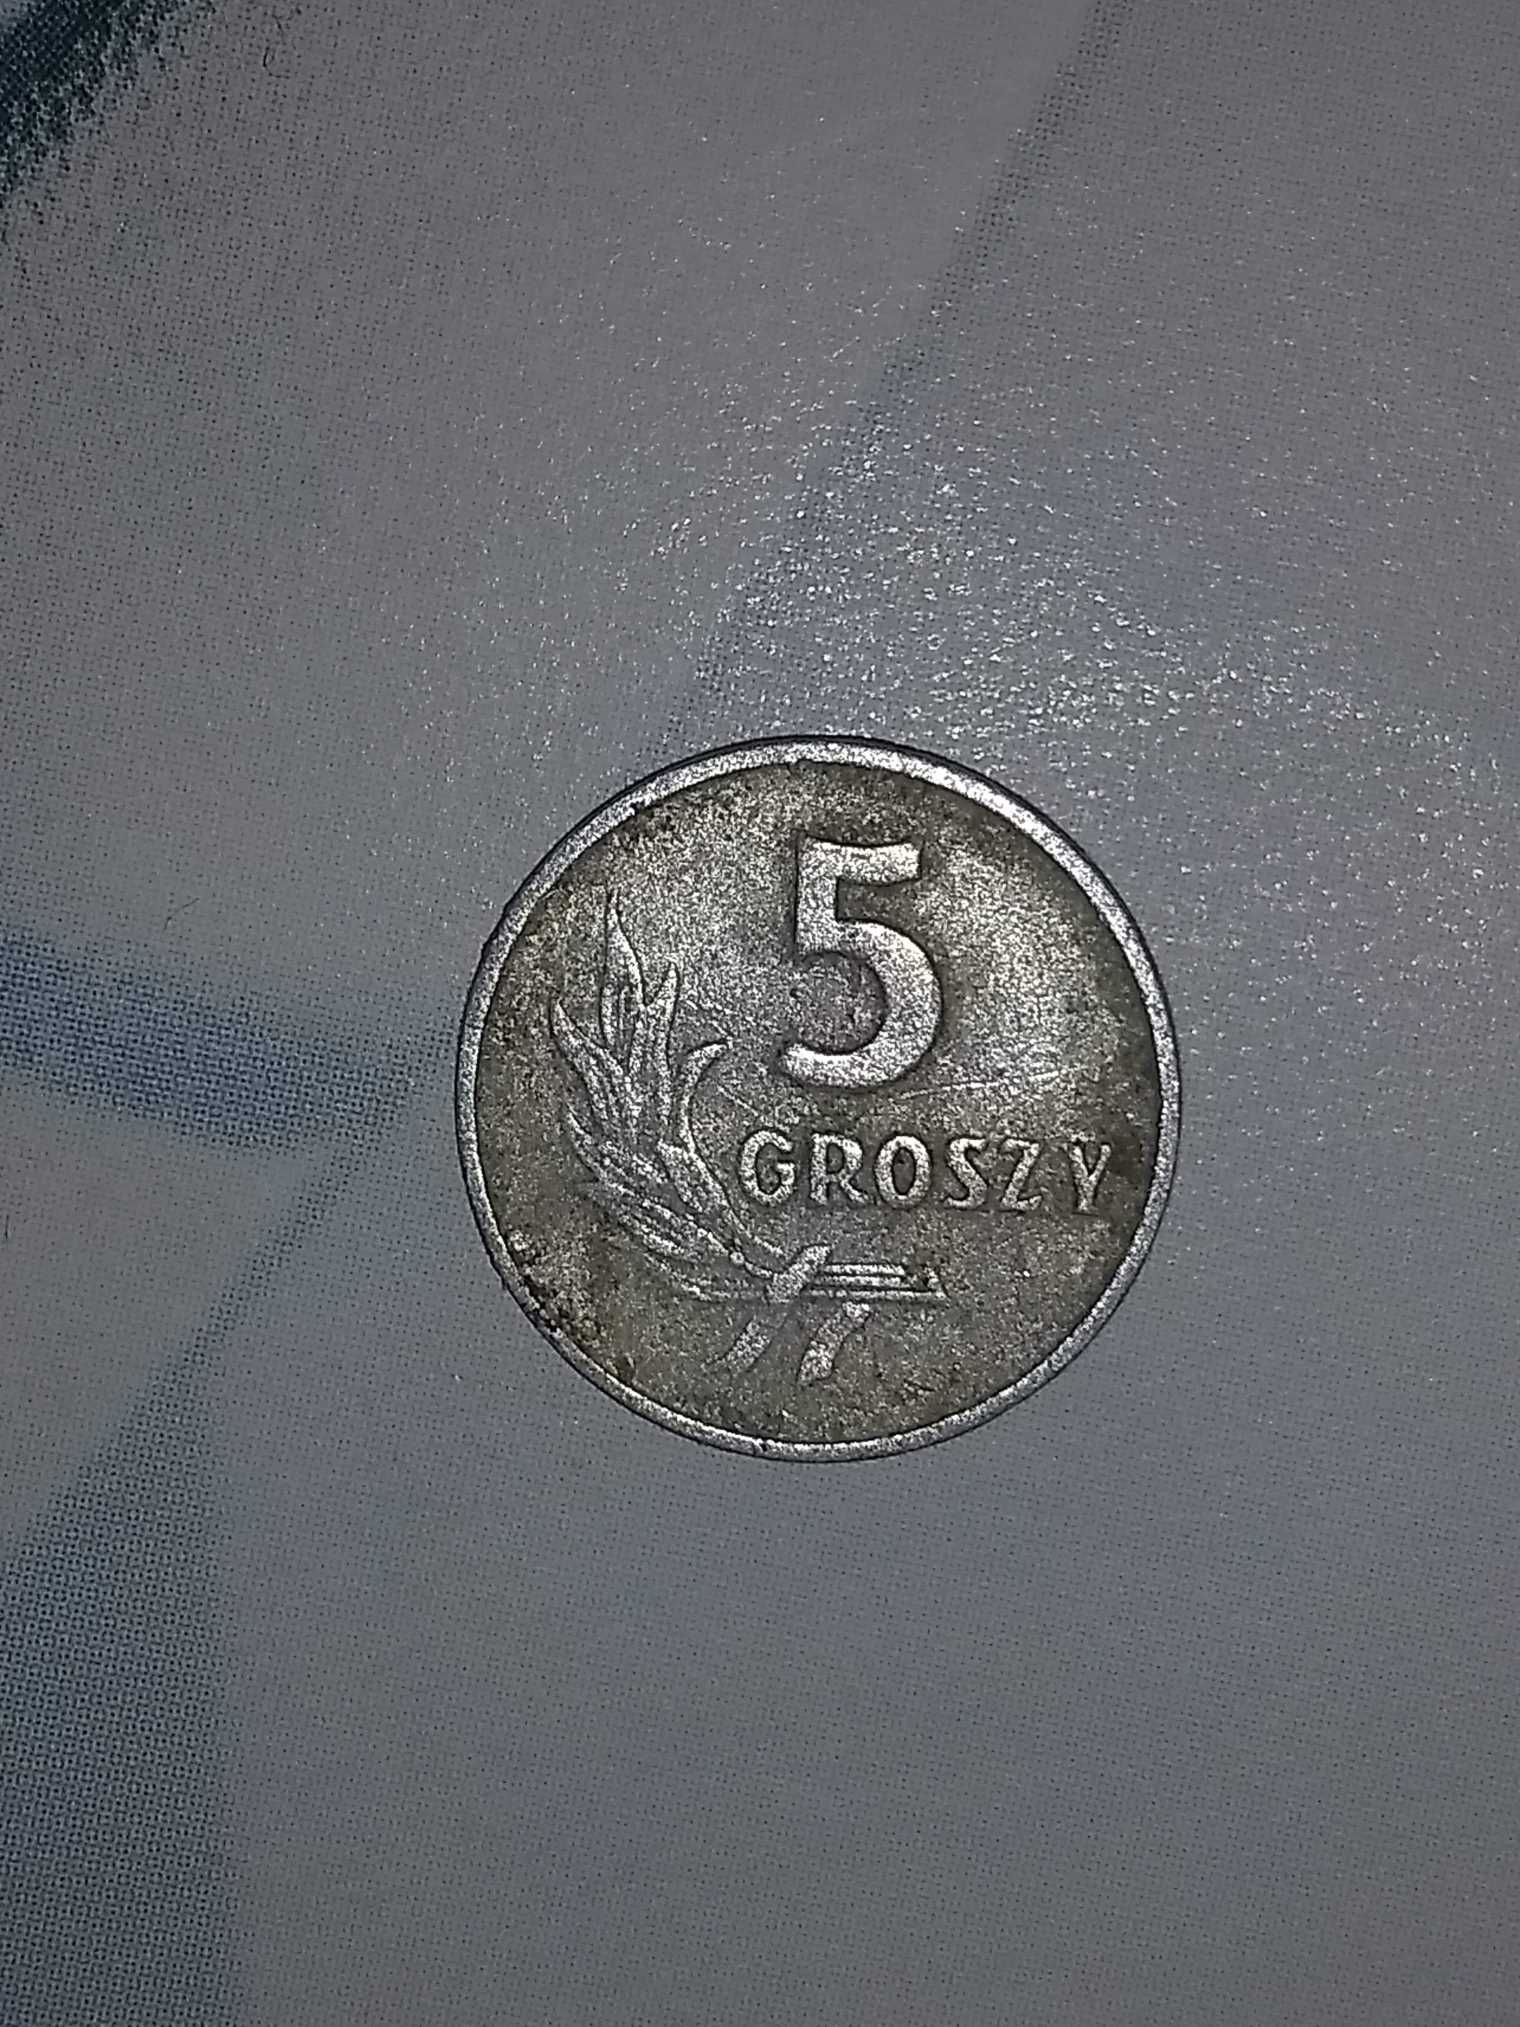 5 Groszy 1963 !!